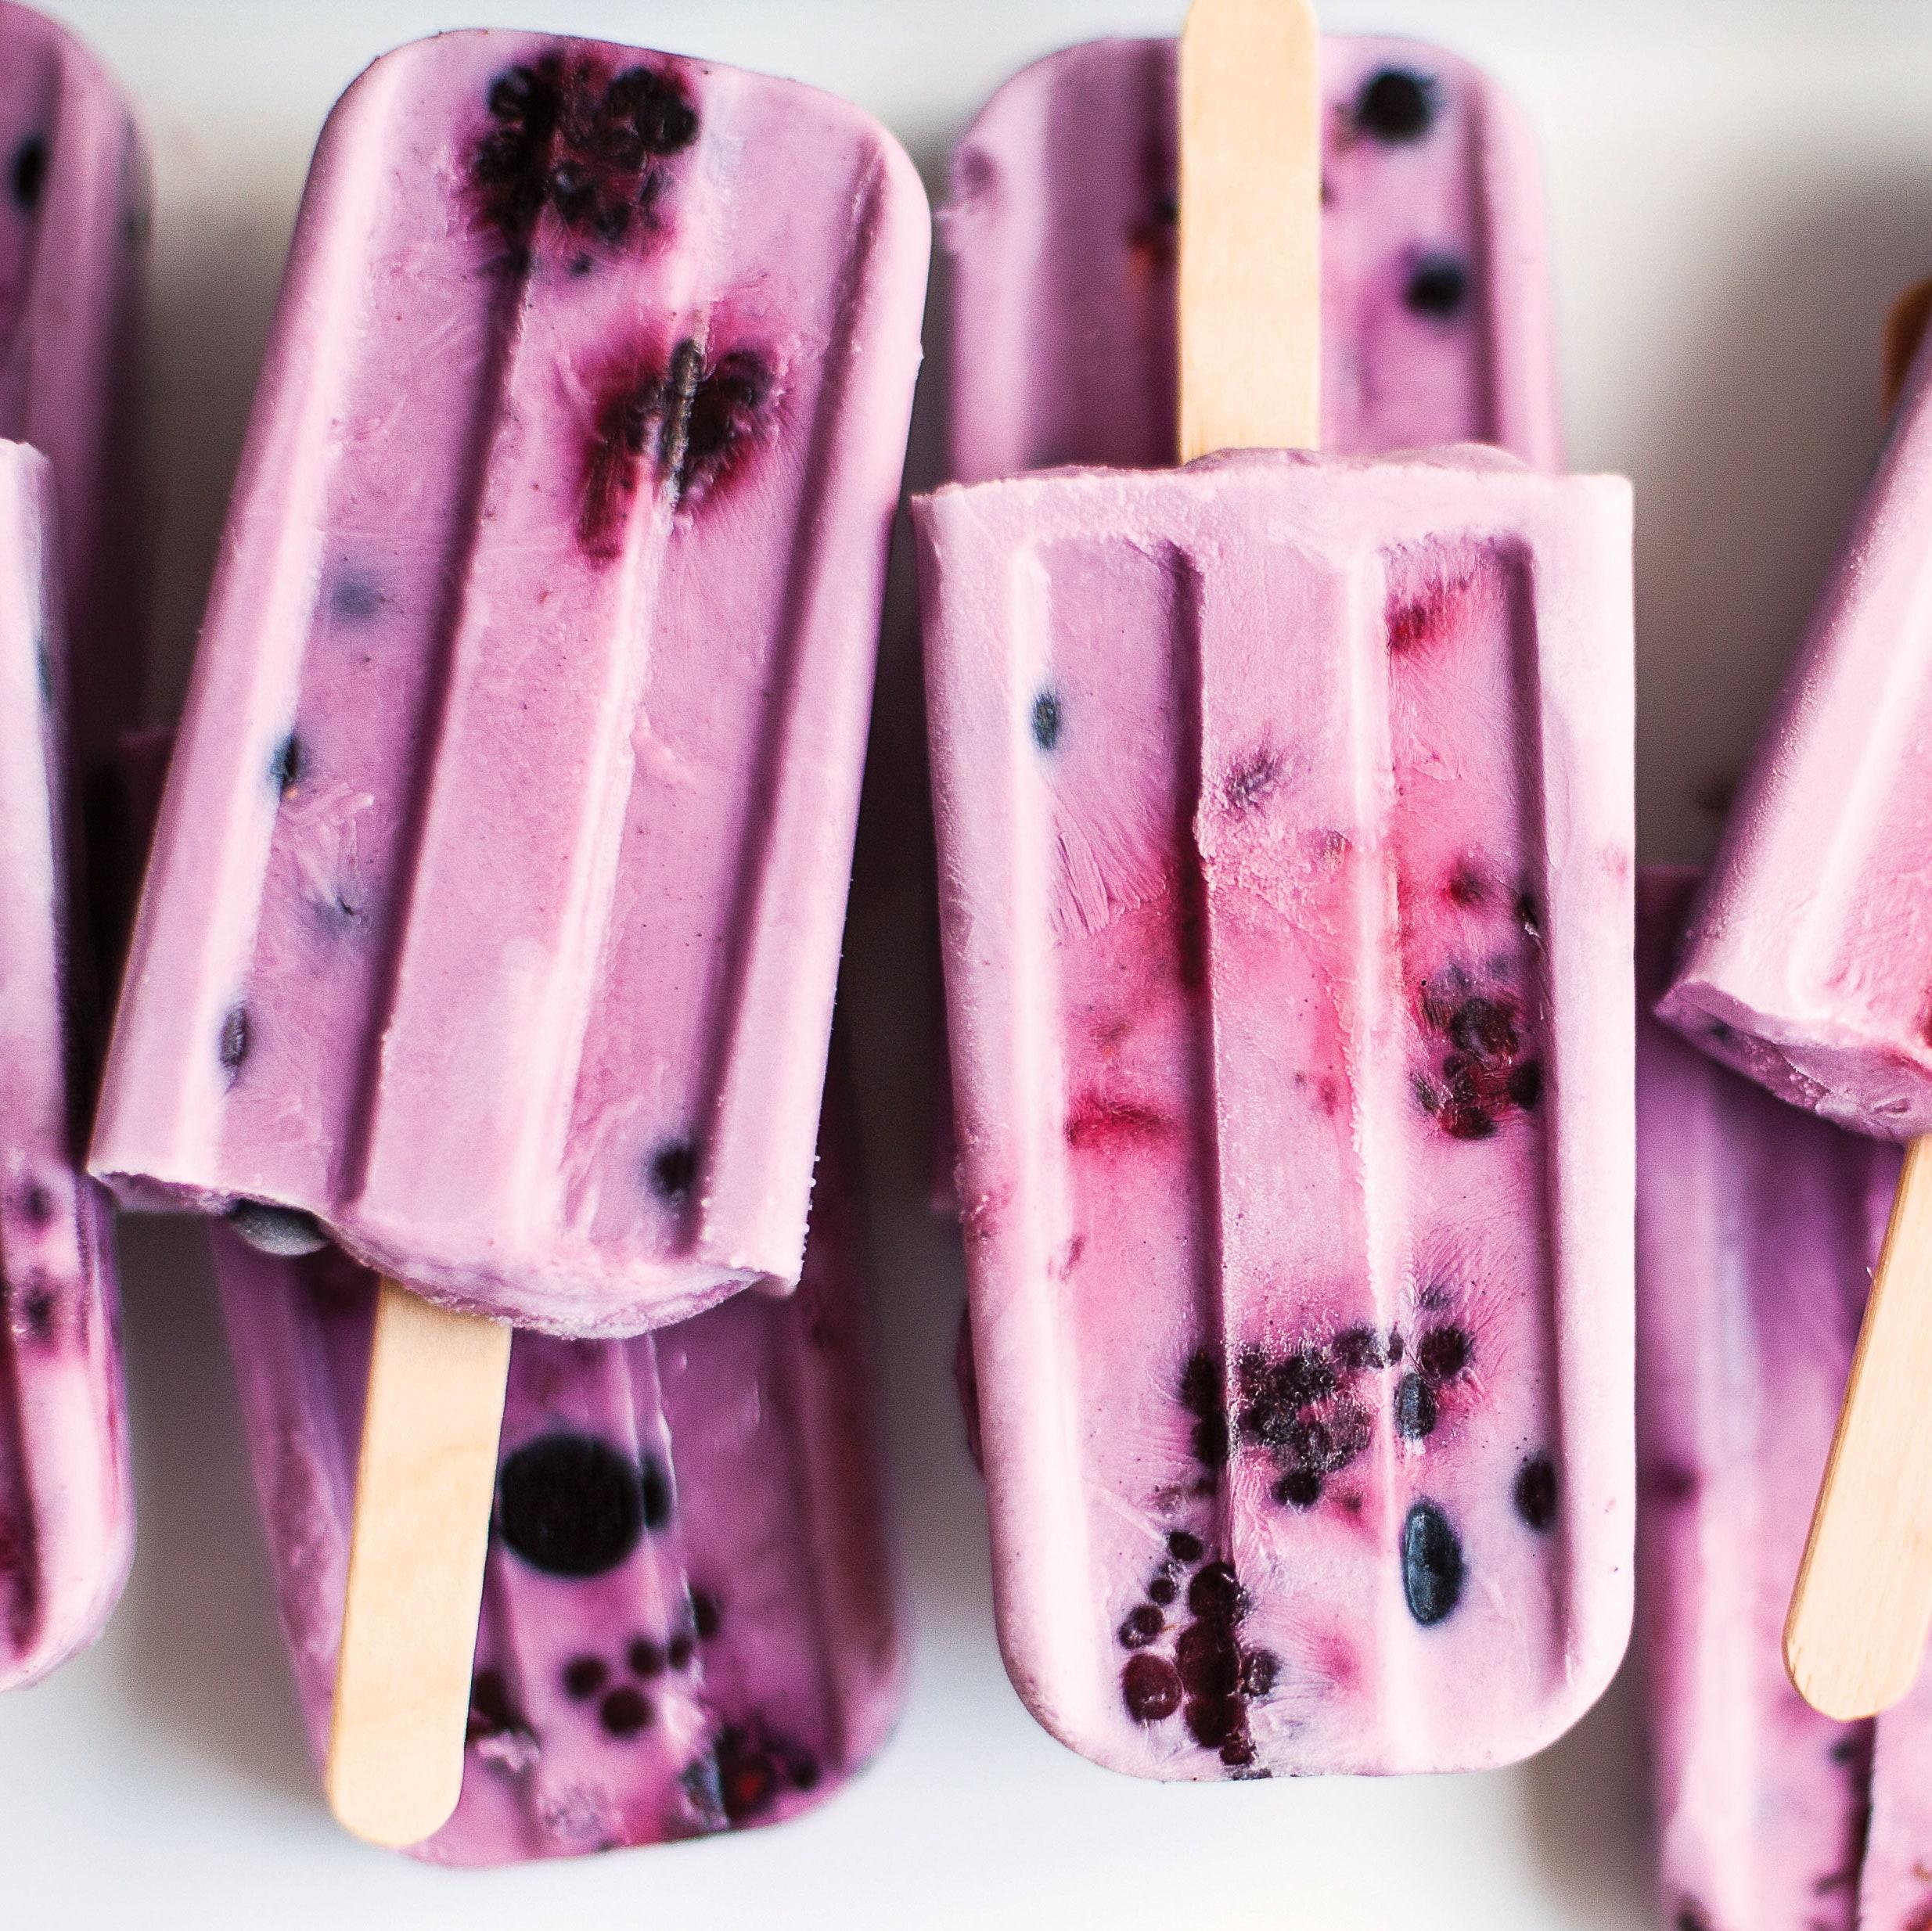 Summer Berry Coconut Milk Ice Pops Recipe Epicurious